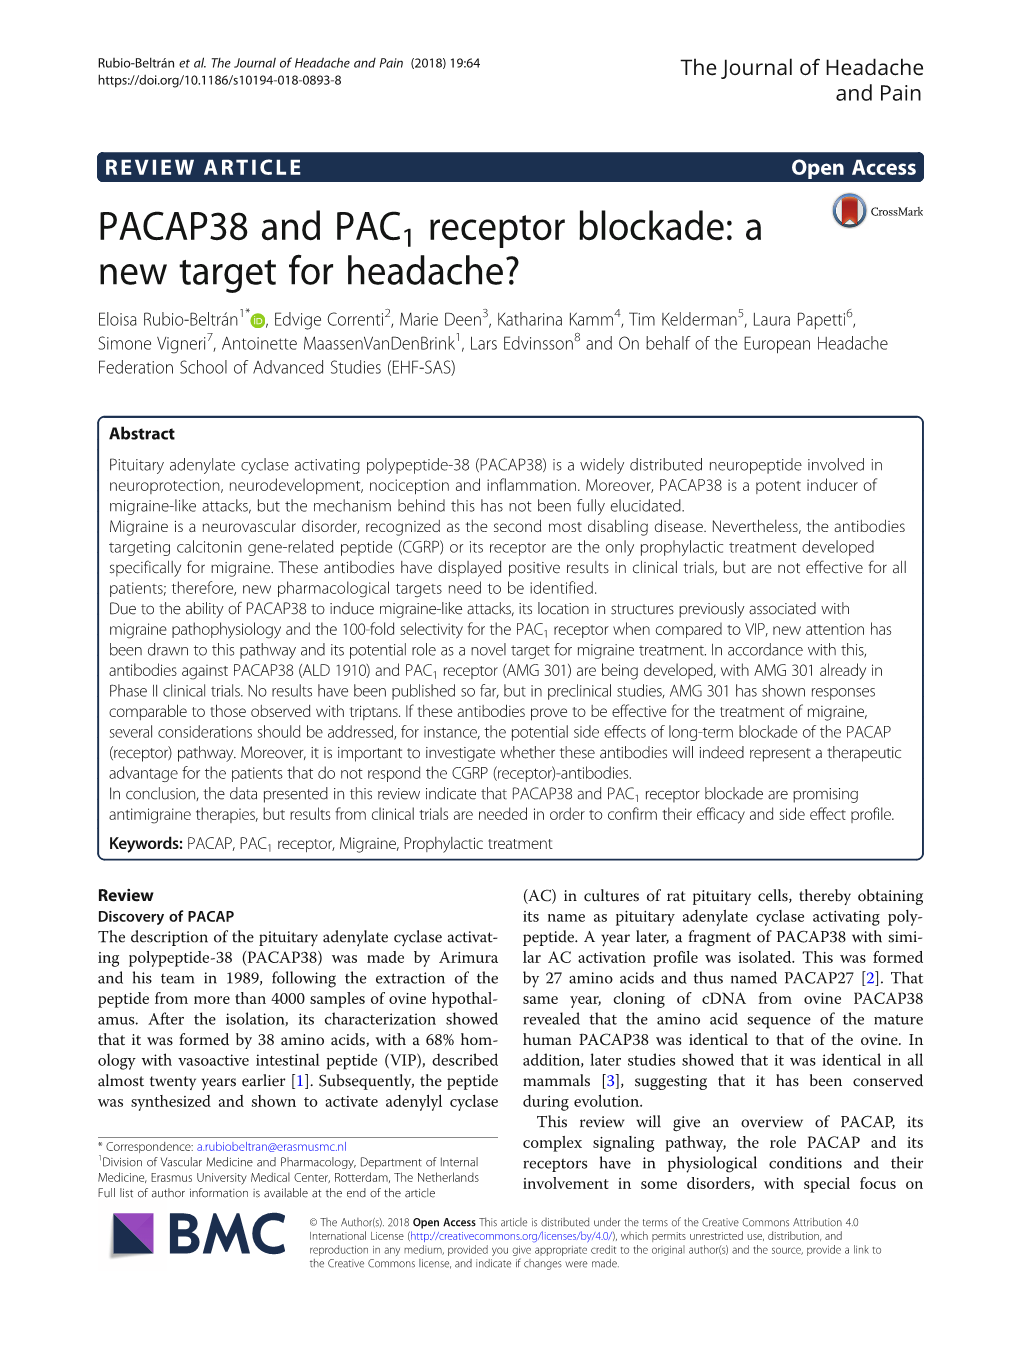 PACAP38 and PAC1 Receptor Blockade